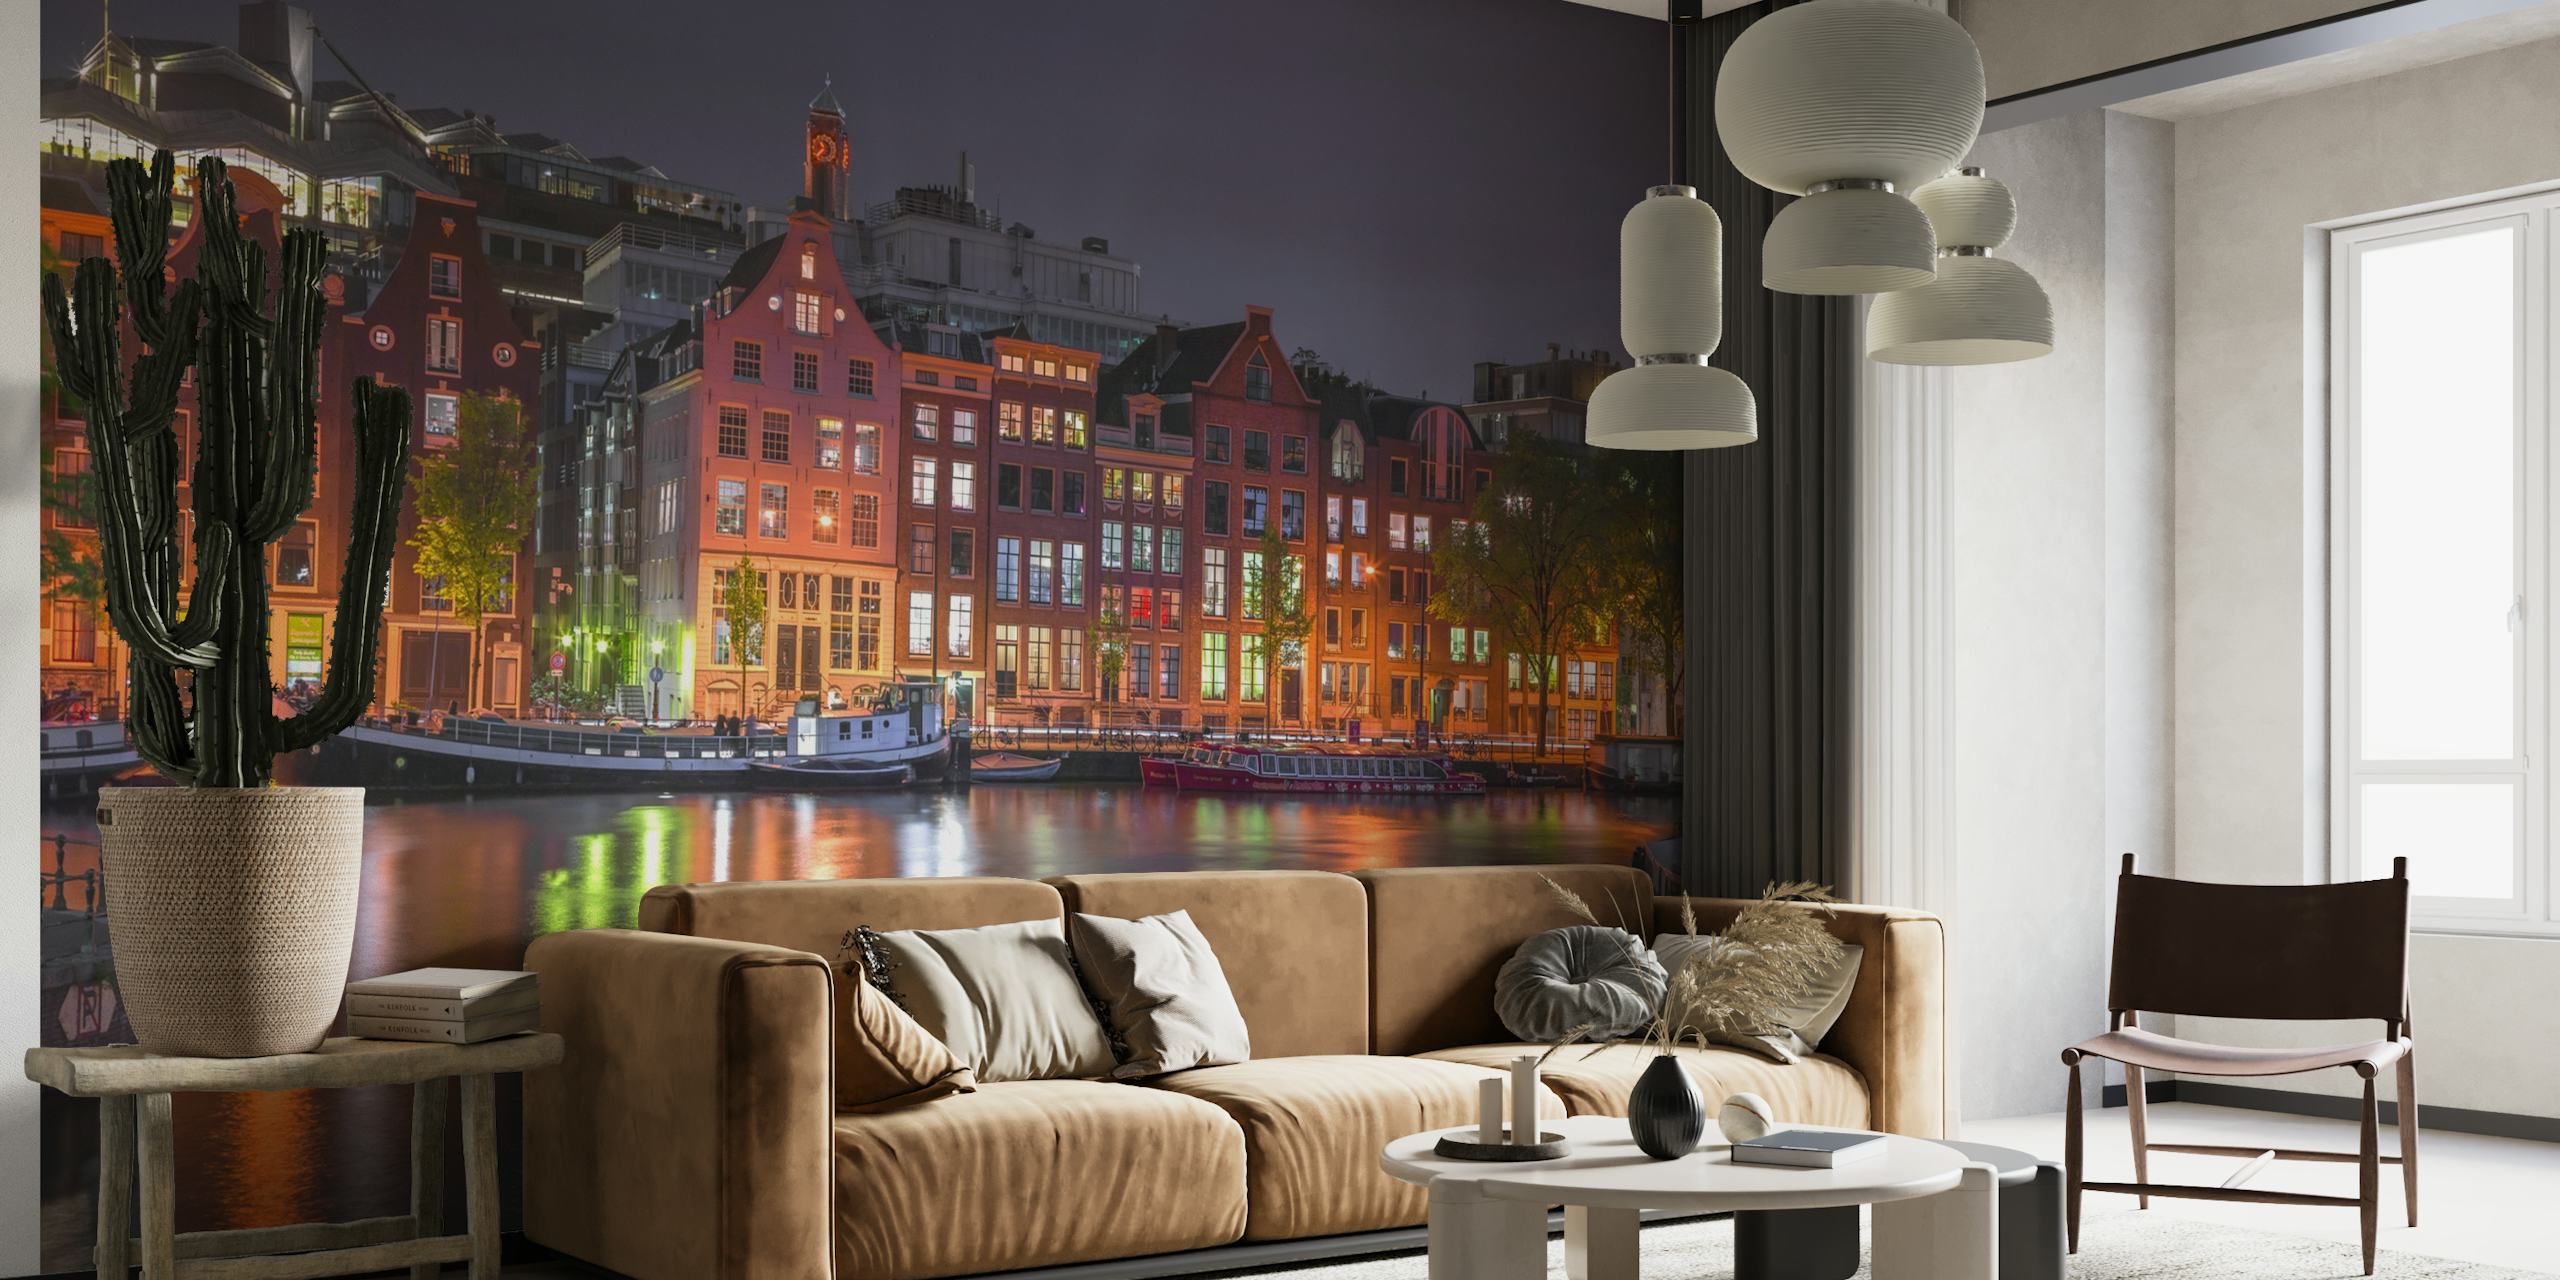 Amsterdam canal at night wallpaper